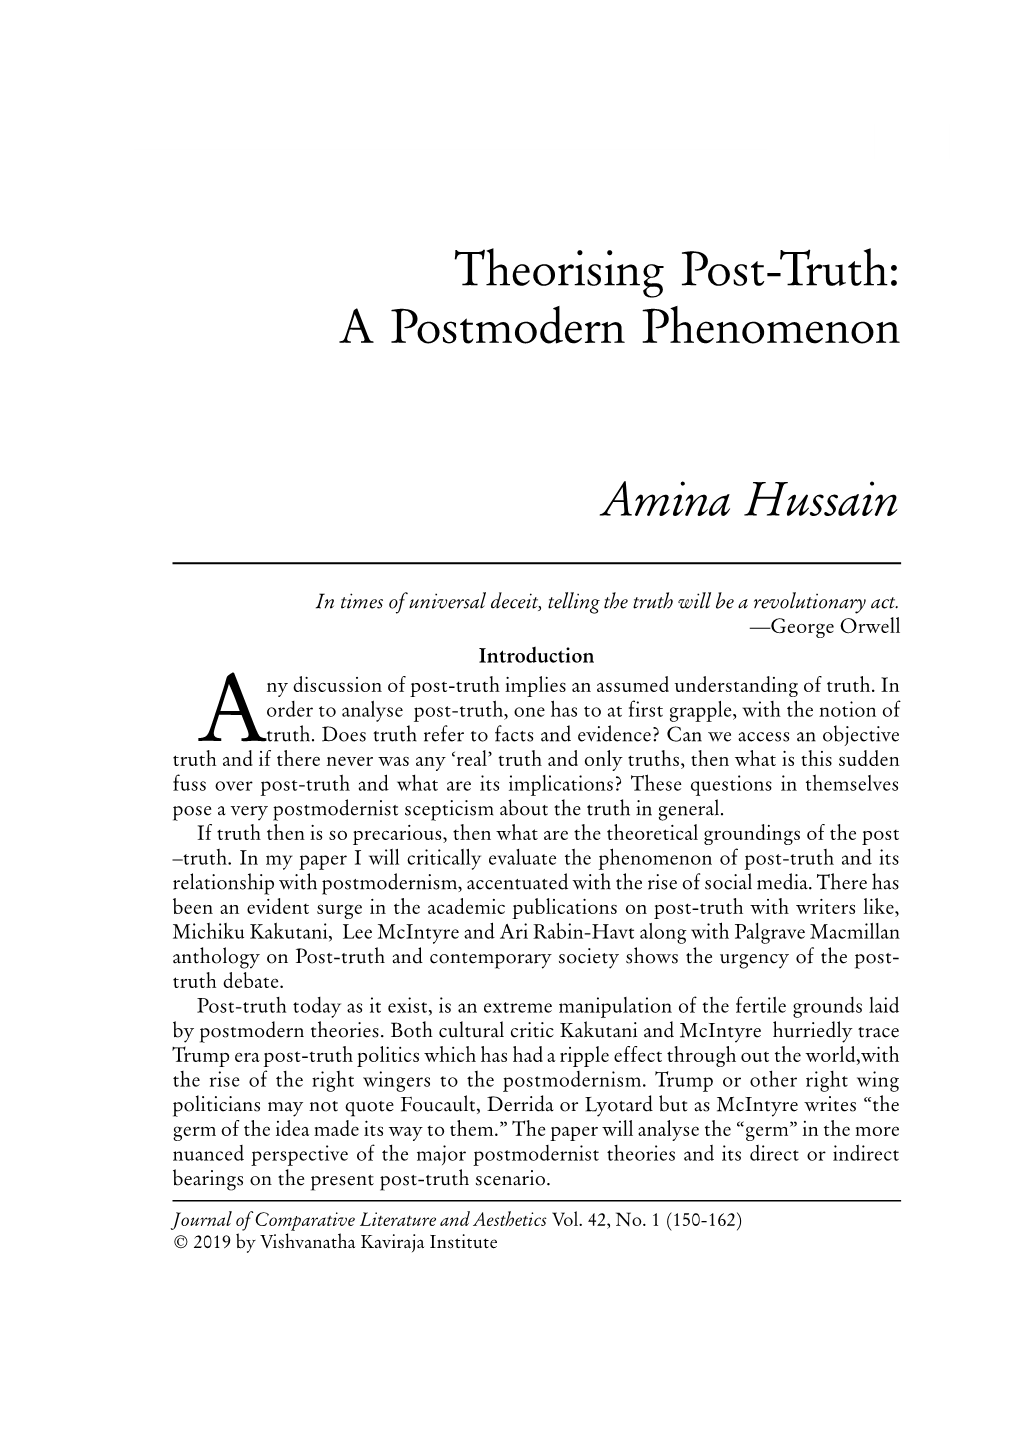 Theorising Post-Truth: a Postmodern Phenomenon